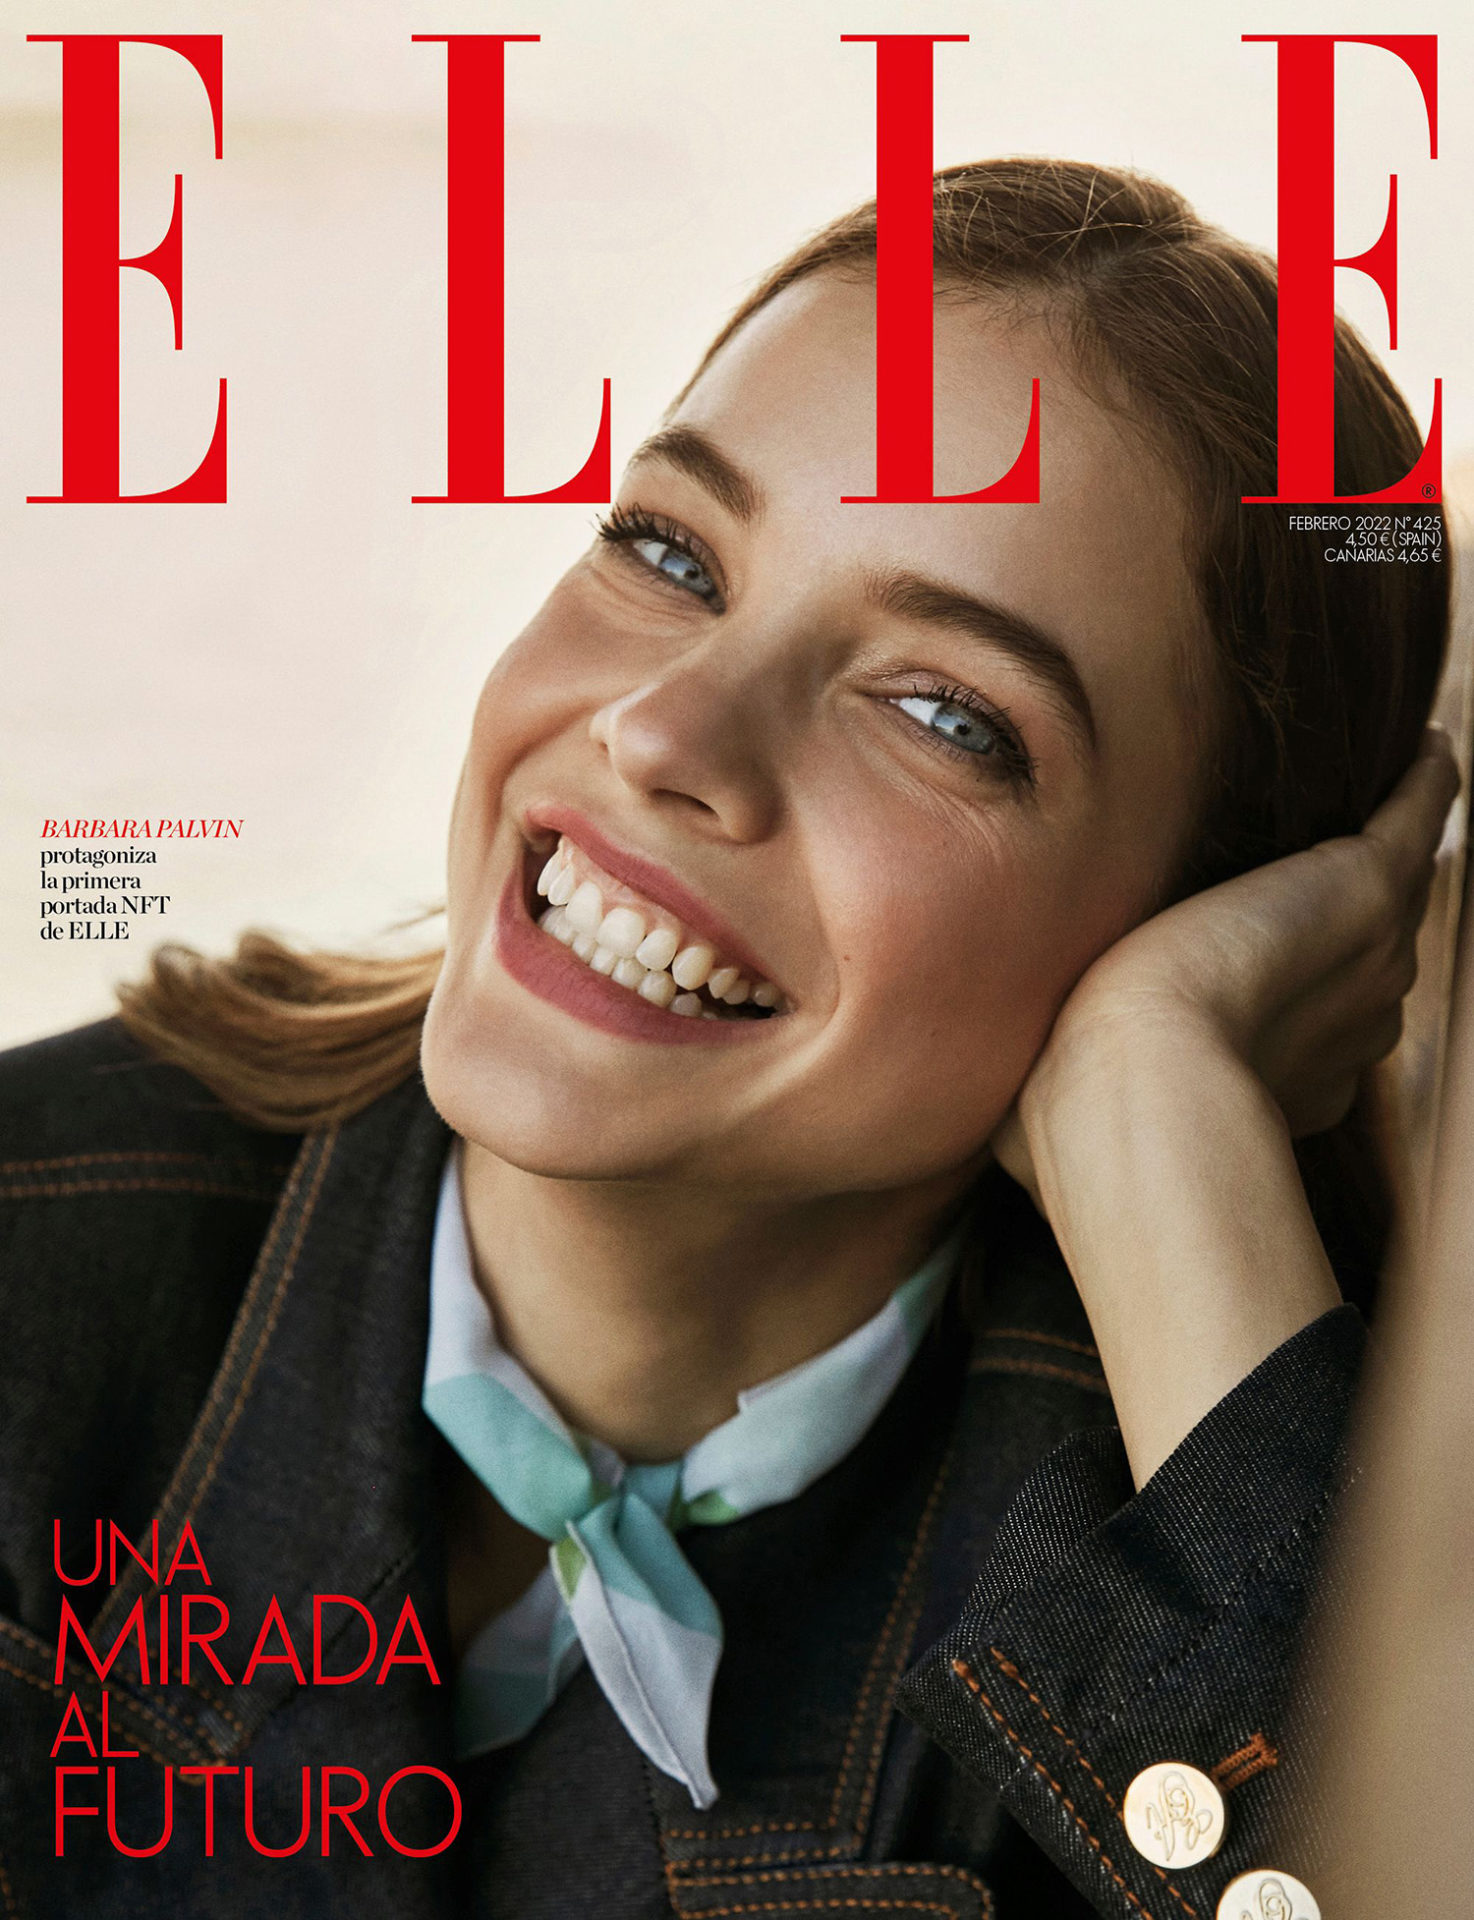 Barbara Palvin in Emporio Armani on Elle Spain February 2022 covers by Rafa Gallar